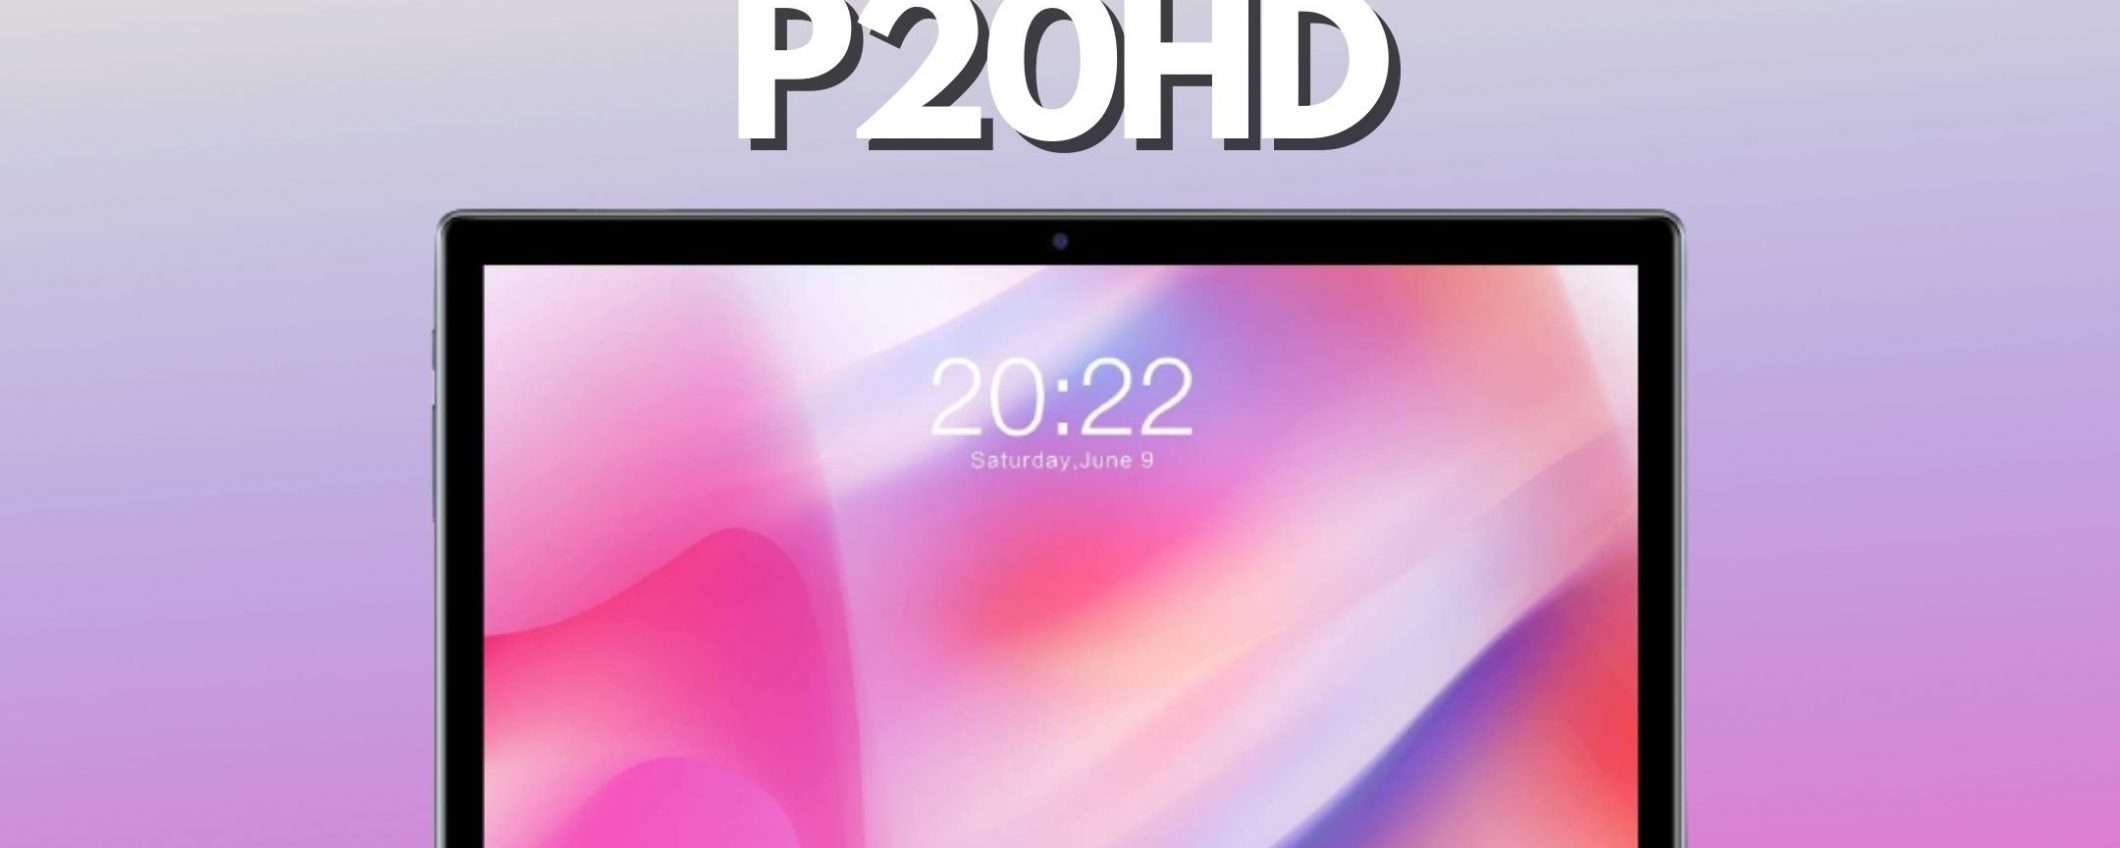 TECLAST P20HD: il tablet in offerta a prezzo WOW